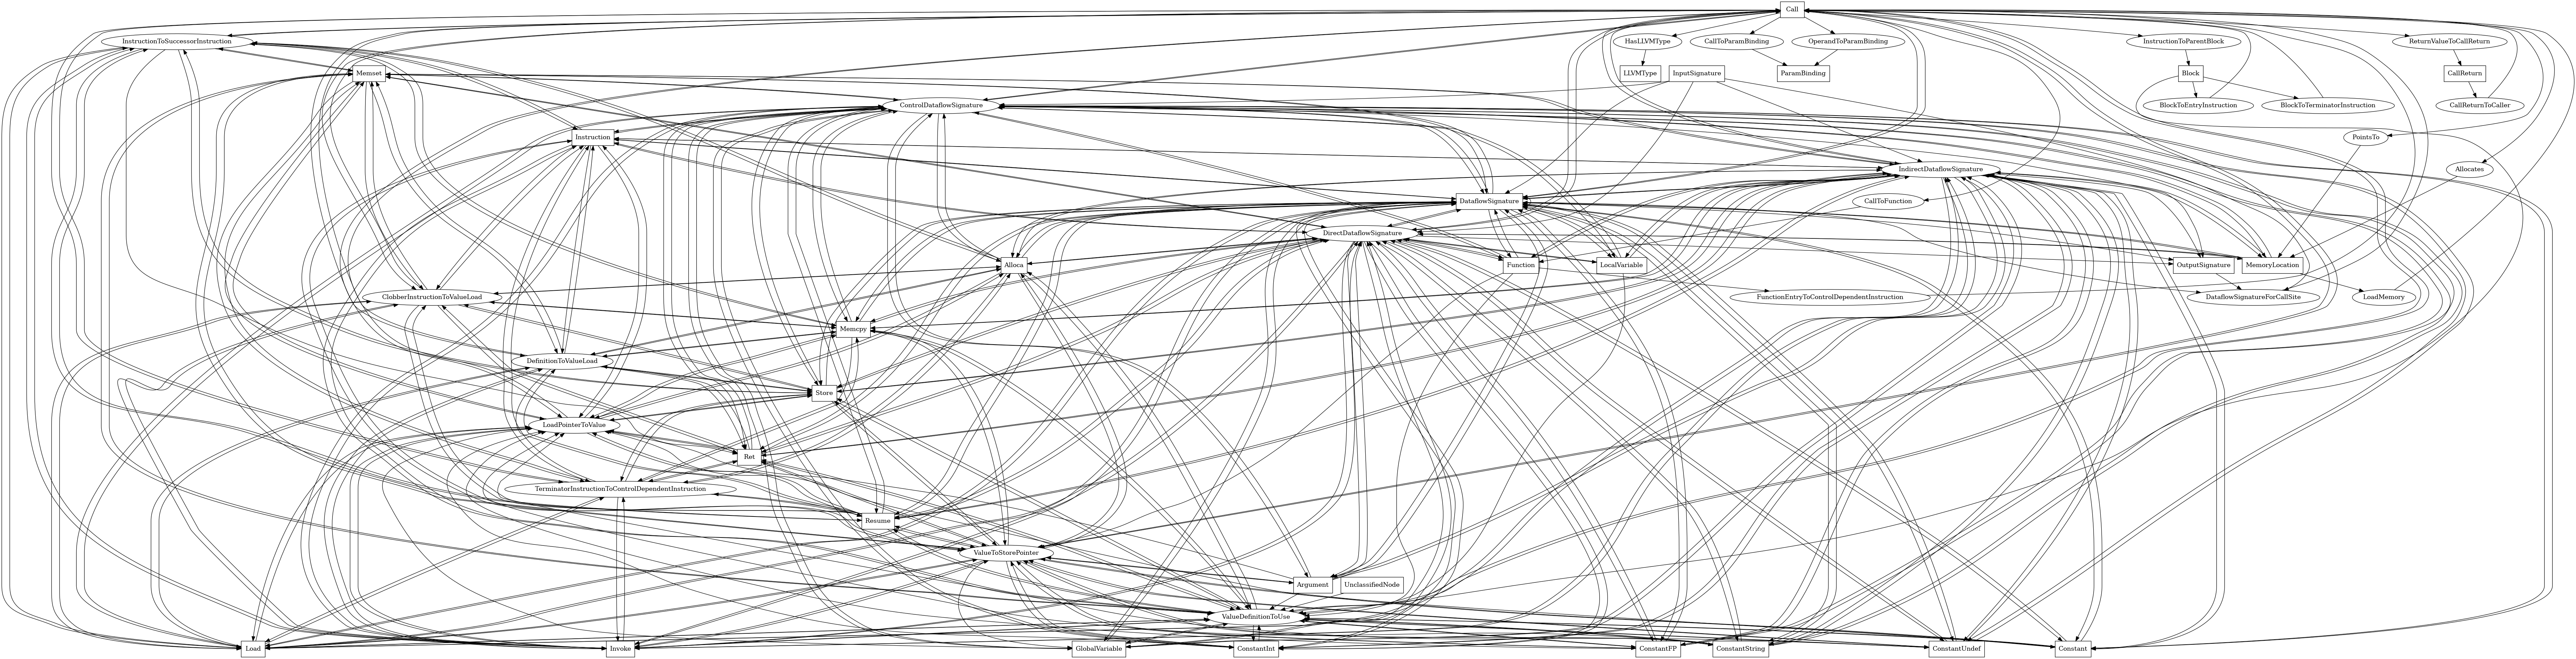 Entity-relationship diagram for Call nodes